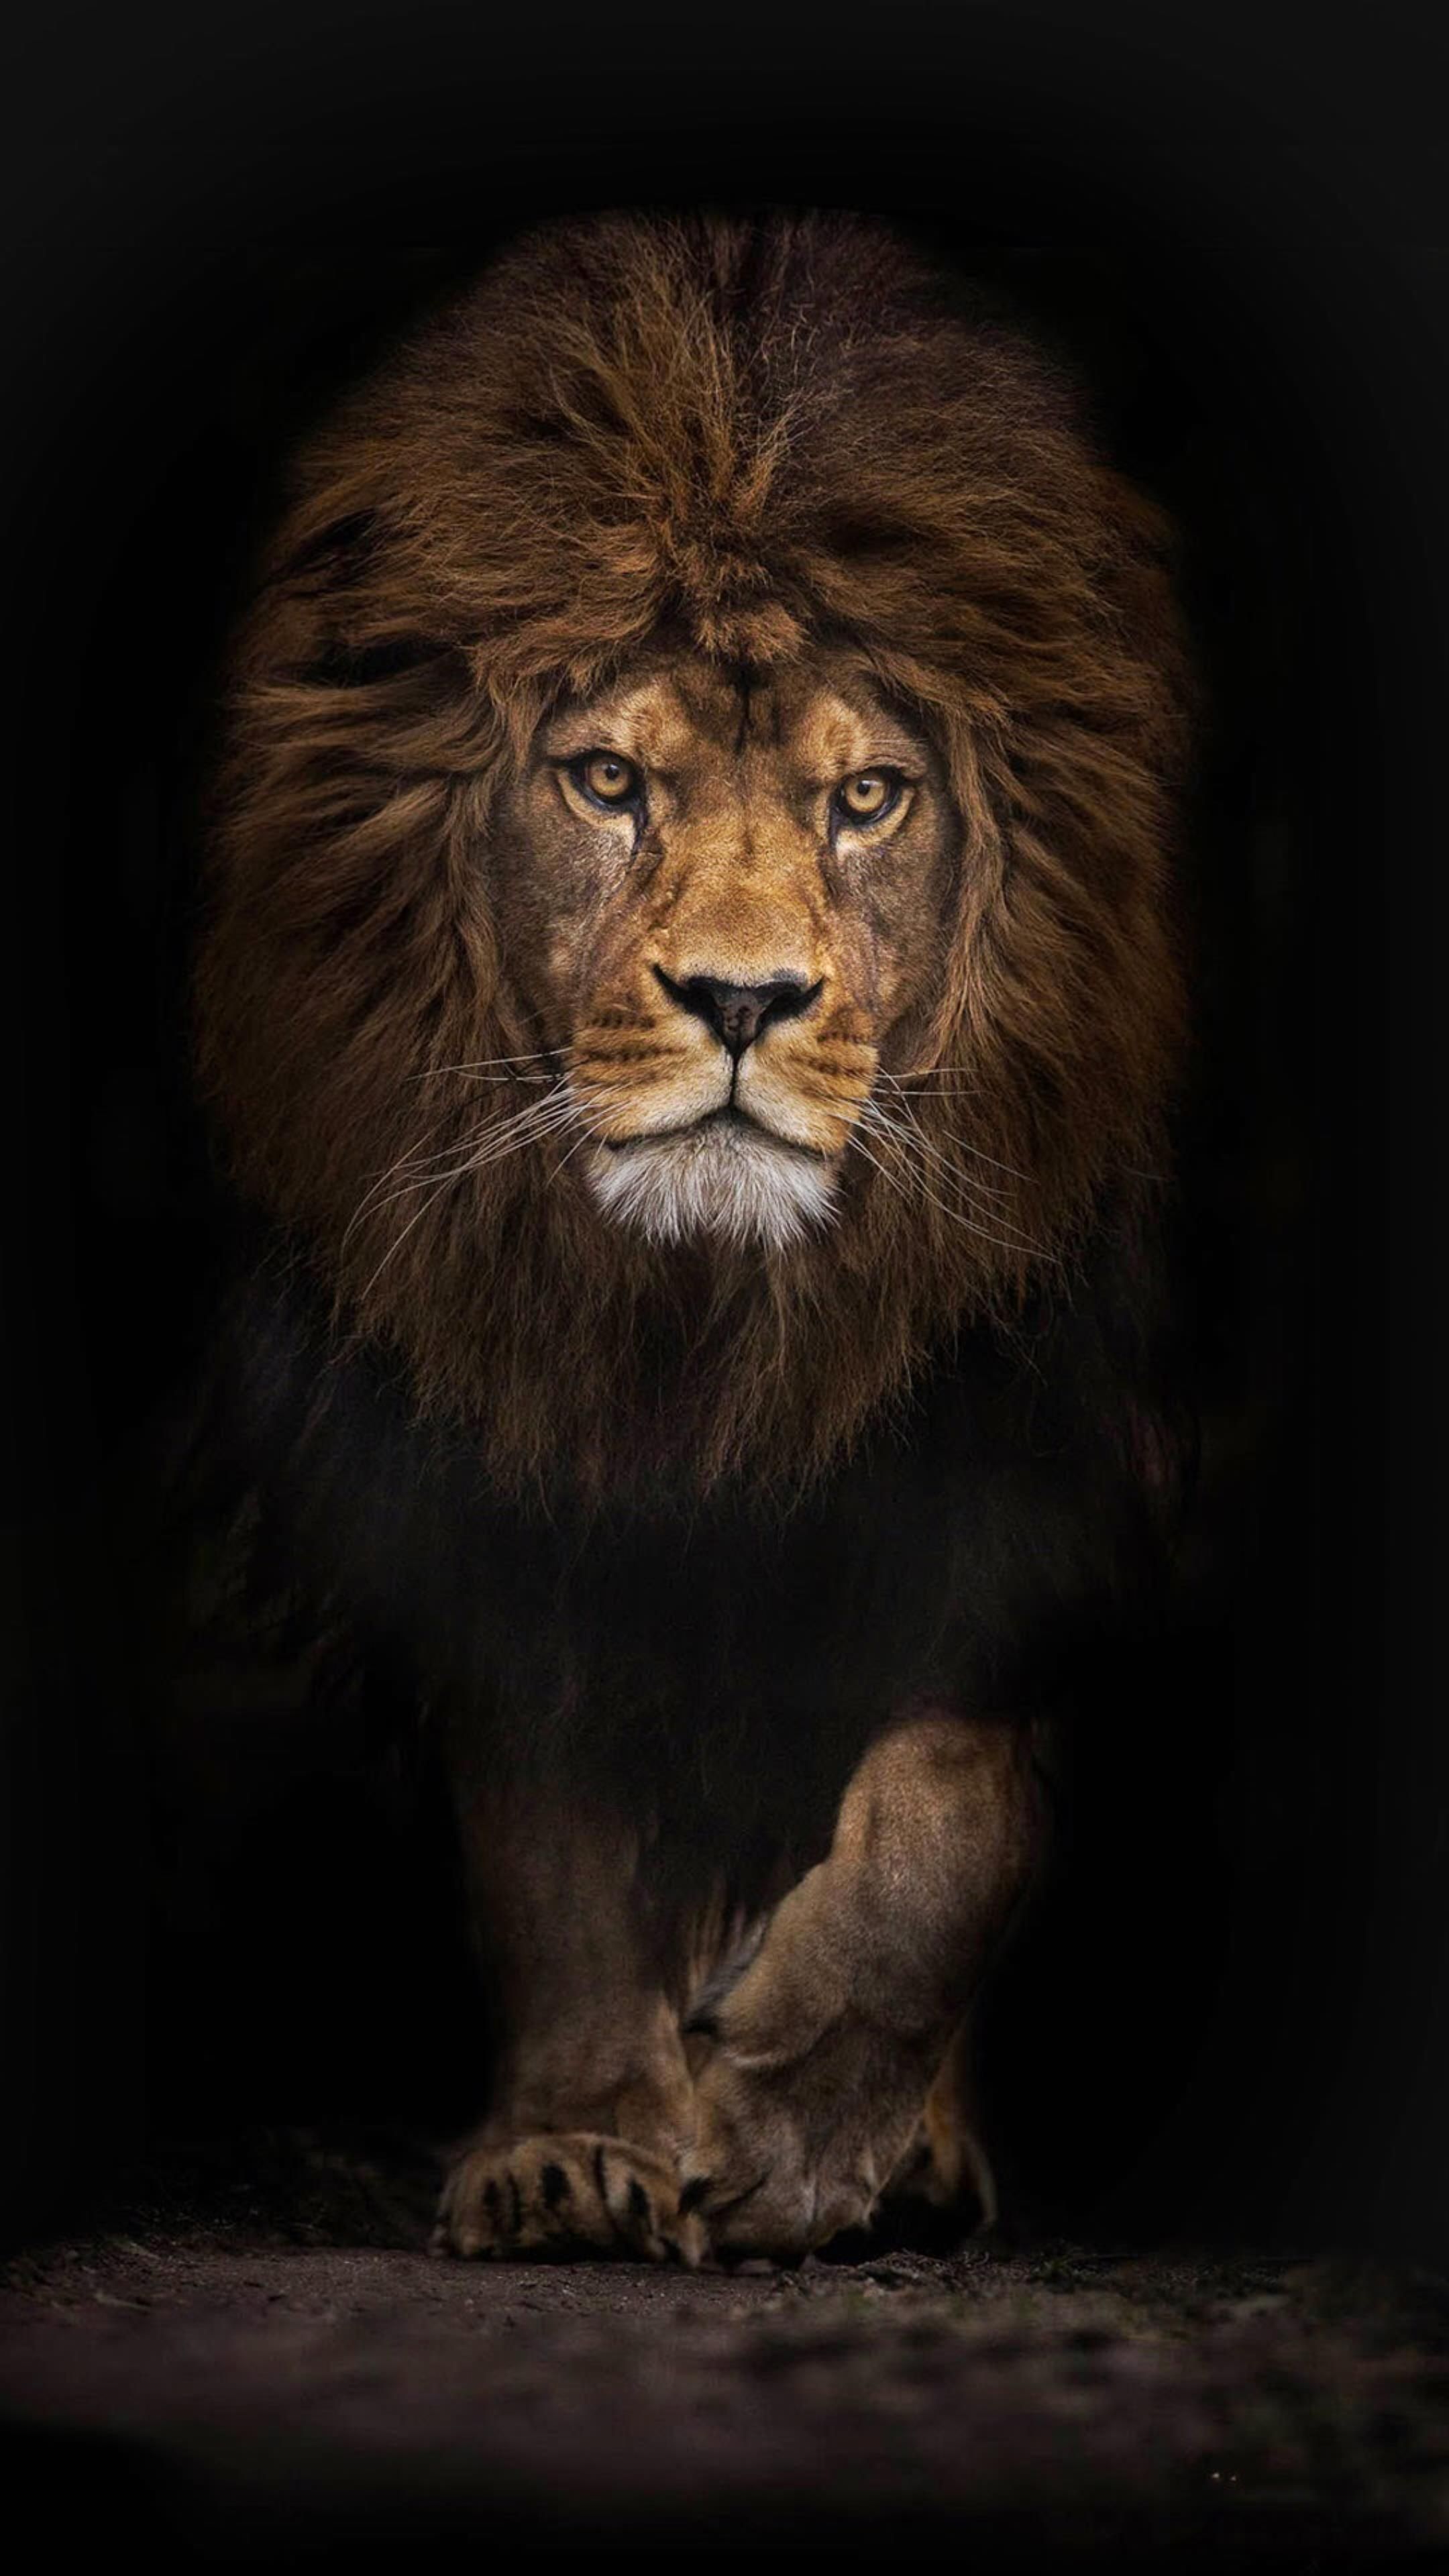 AMOLED Animal Wallpaper. Lion wallpaper, Animals wild